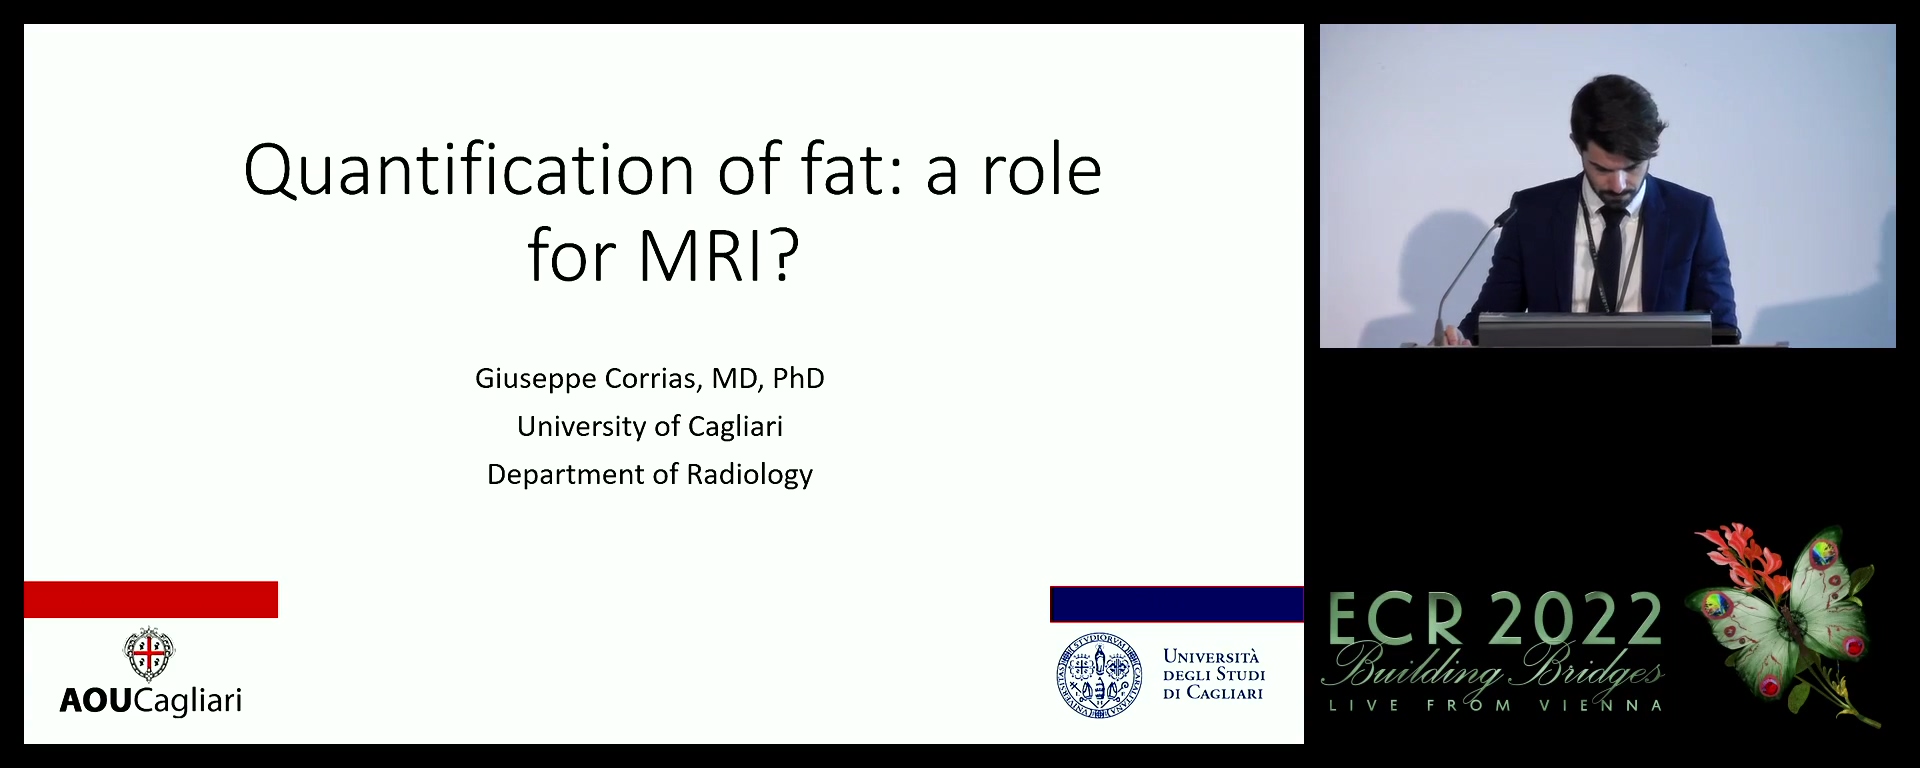 Quantification of fat: a role for MRI?